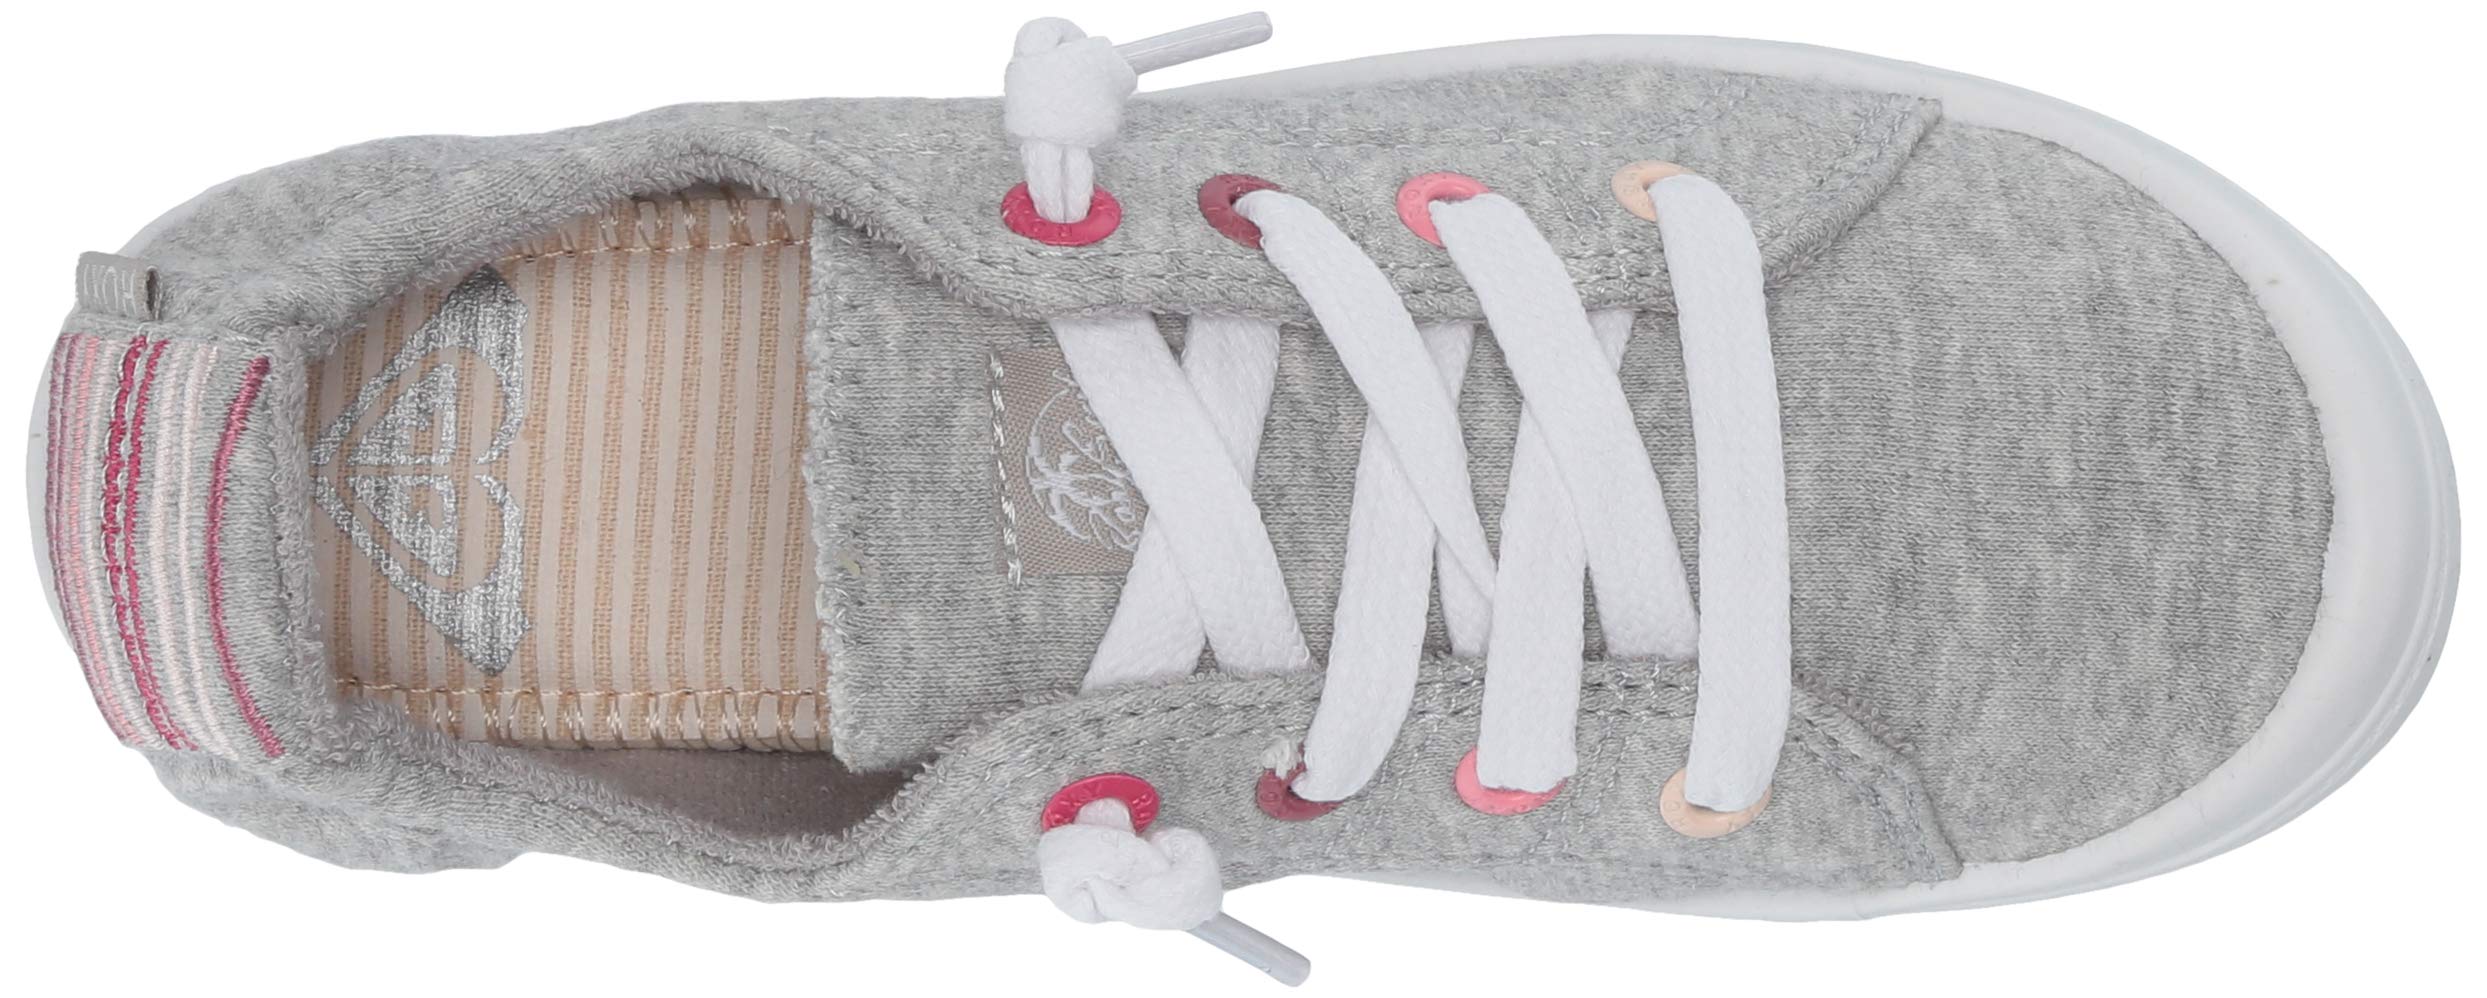 Roxy Girl's Bayshore Slip on Sneaker Shoe